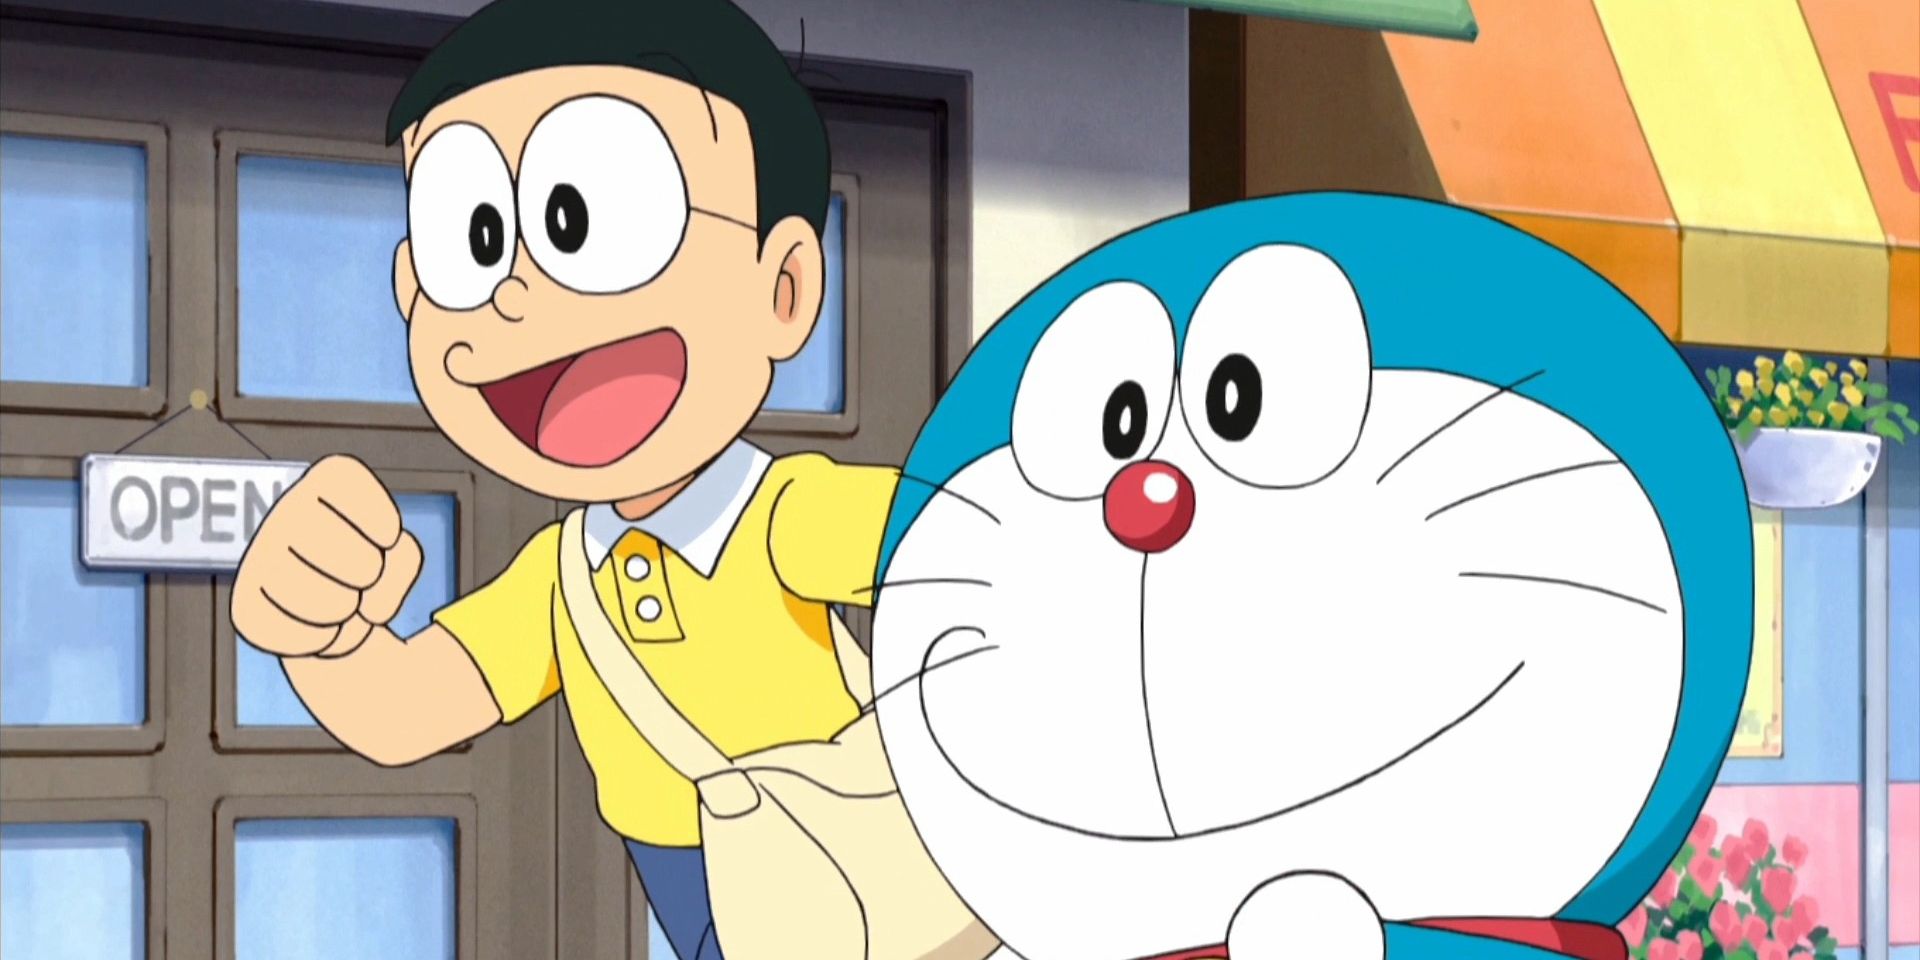 Anime Doraemon Pfp by こた(まんぼう)